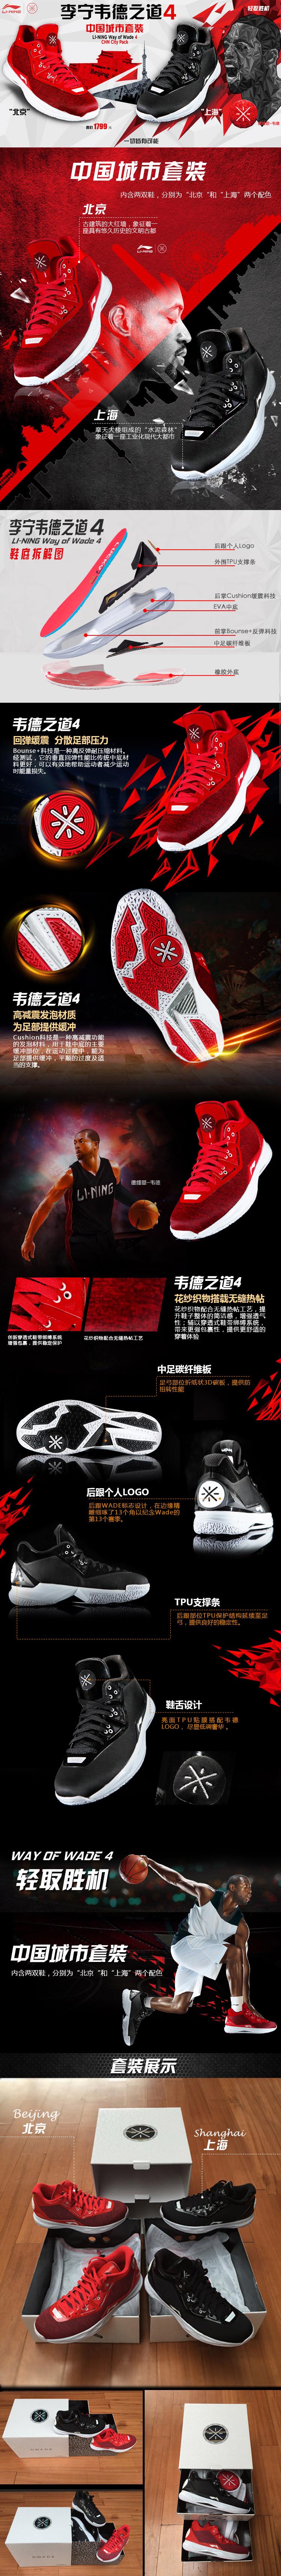 Li-Ning WoW4 Way of Wade 4 "City Pack" Premium Basketball Shoes 